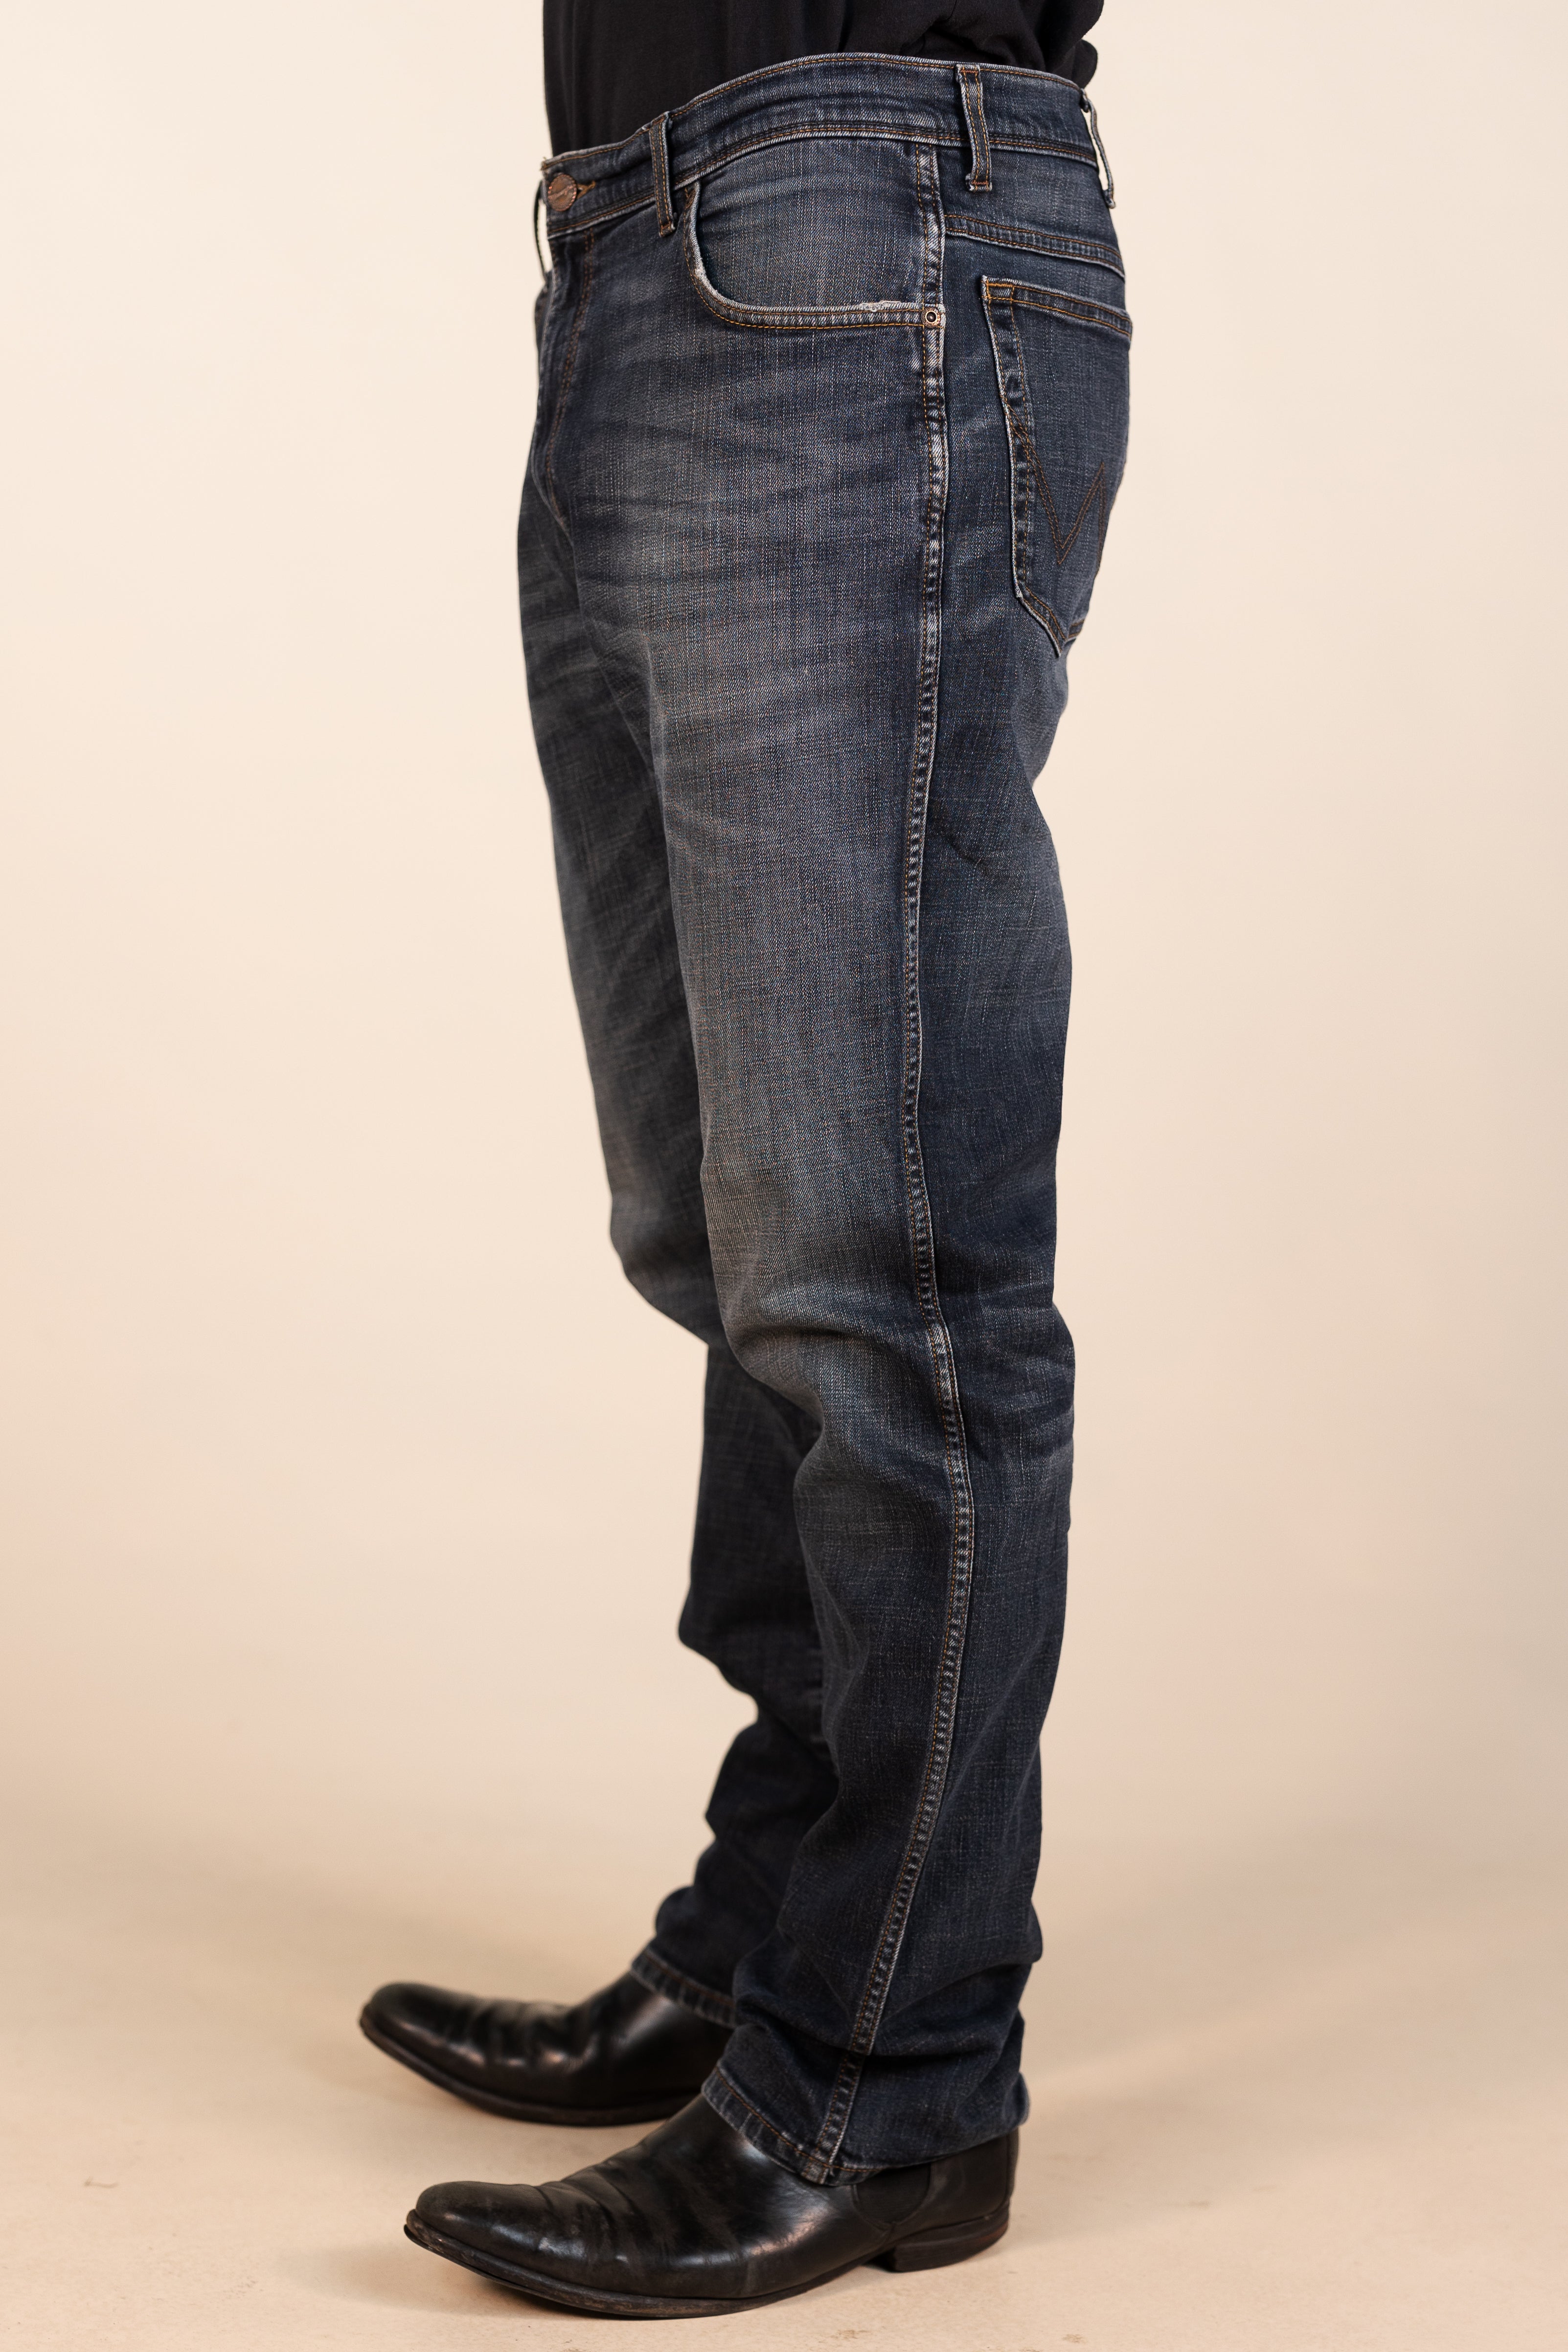 Wrangler 'Texas' Fit Jeans